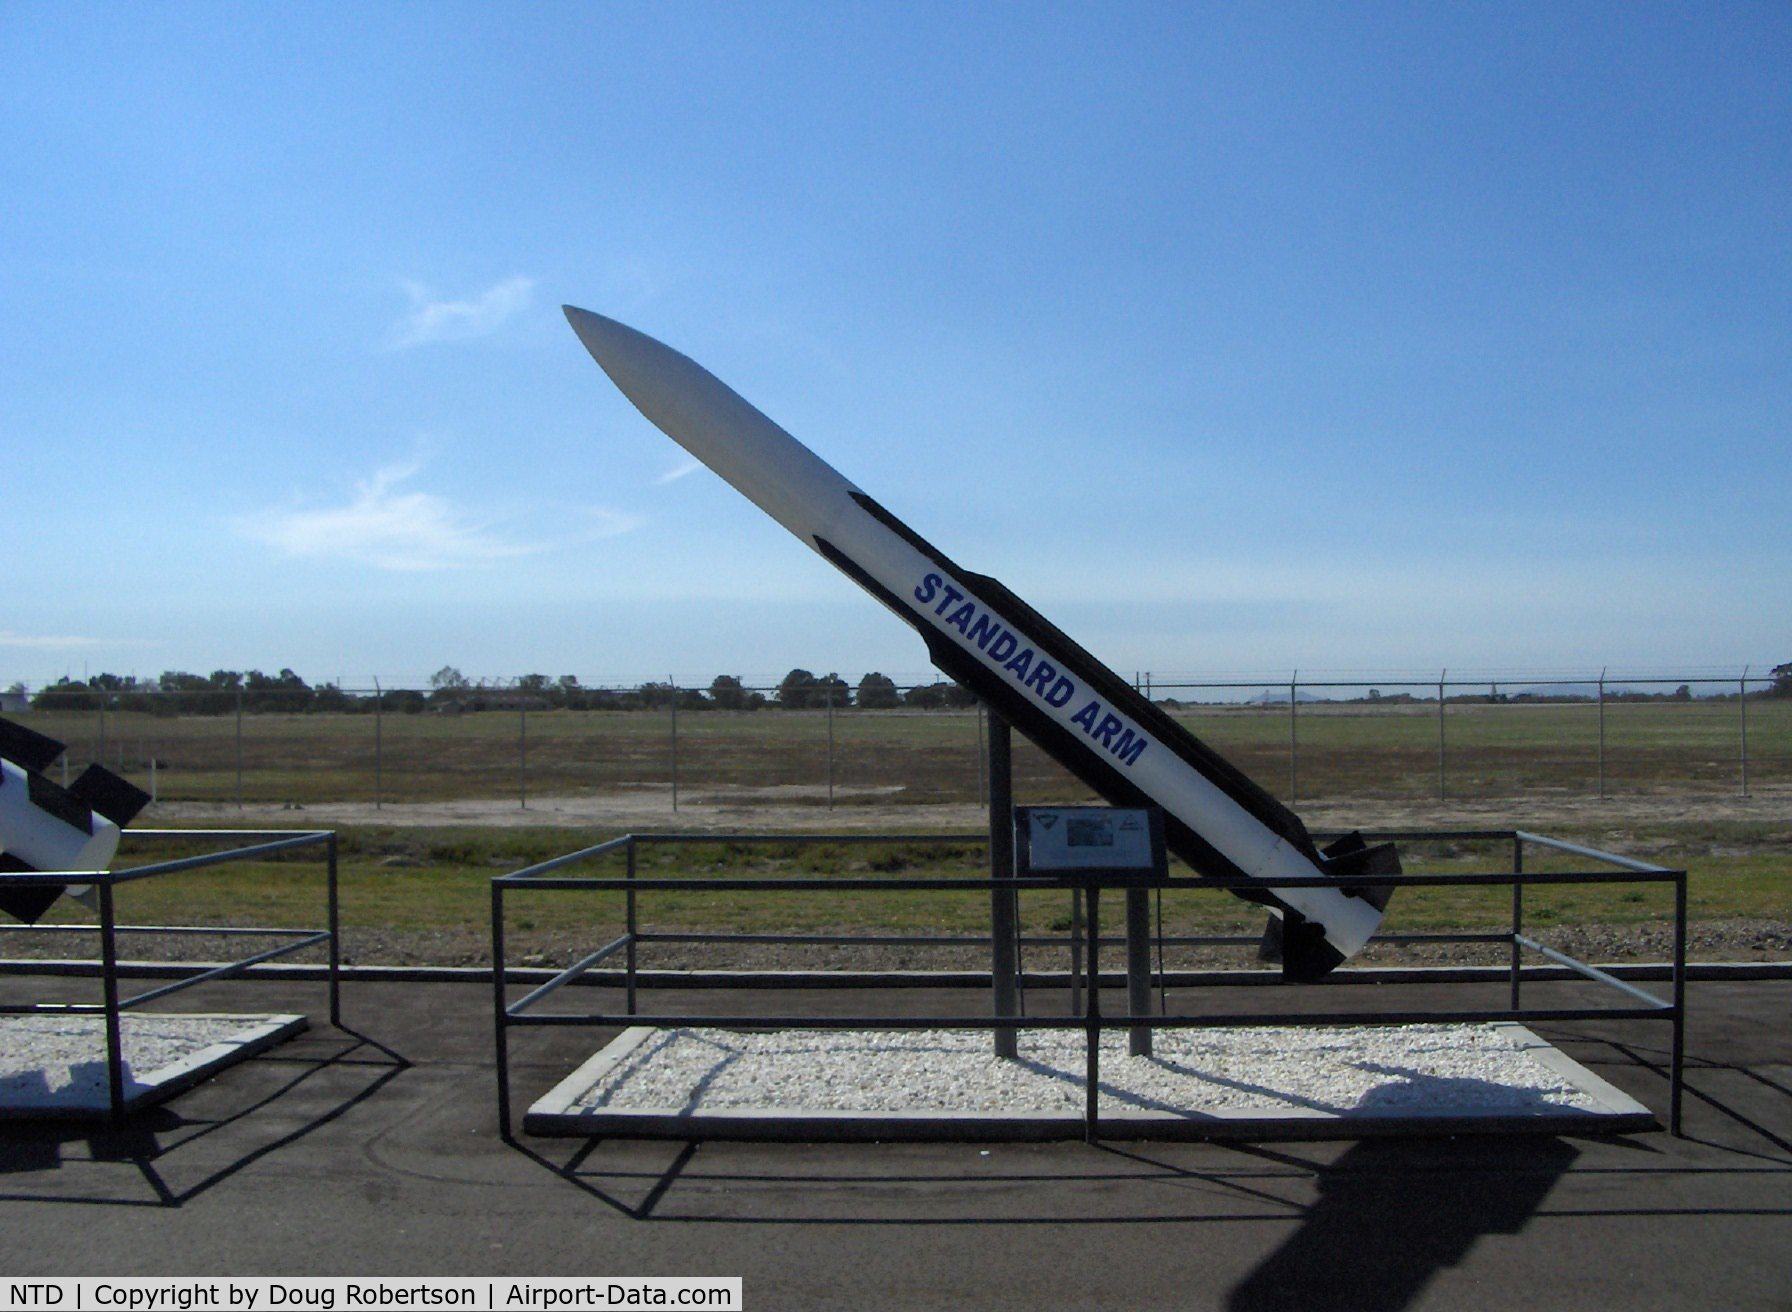 Point Mugu Nas (naval Base Ventura Co) Airport (NTD) - Missile Park-AGM-78 STANDARD ARM (Anti-Radiation Missile), against RADARs or ships, 215 lb warhead, 35 mile range. 1983 use against Libya in Gulf of Sidra